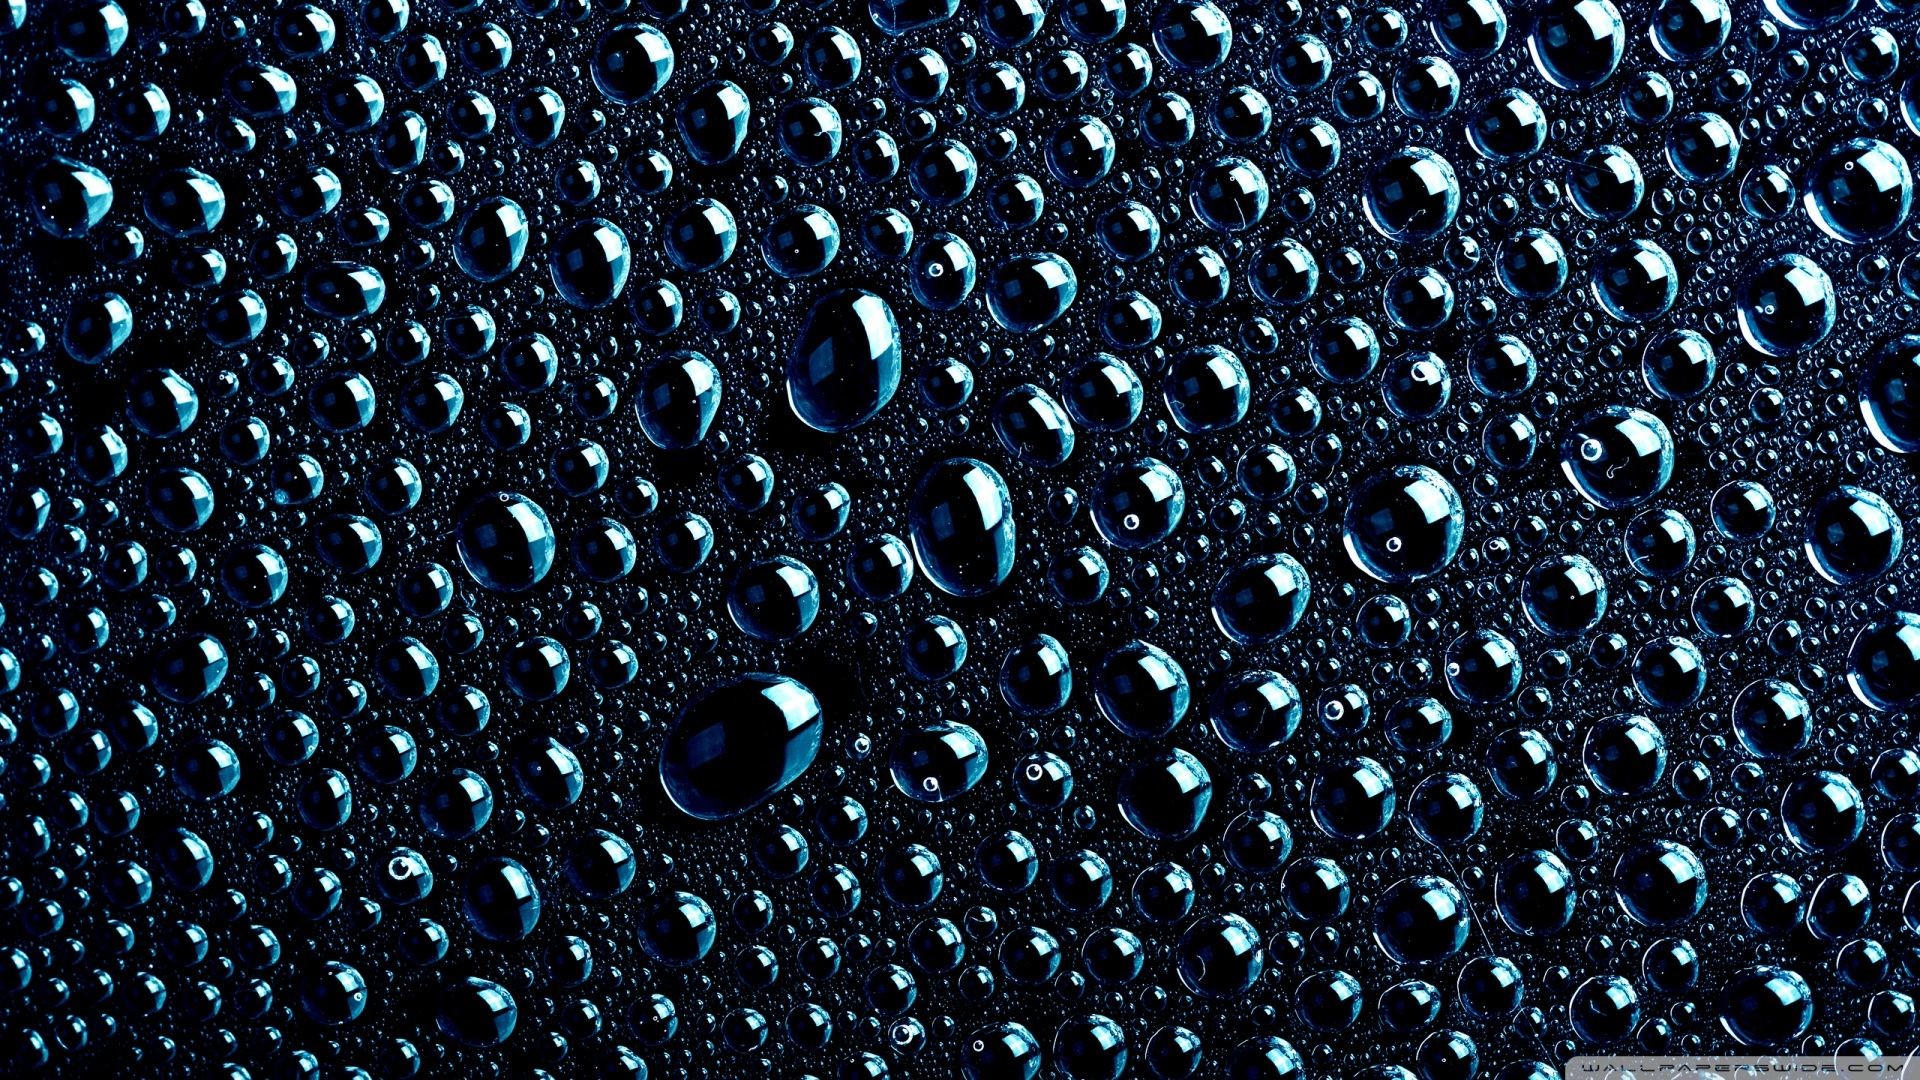 1920x1080 Black Drops Background Image